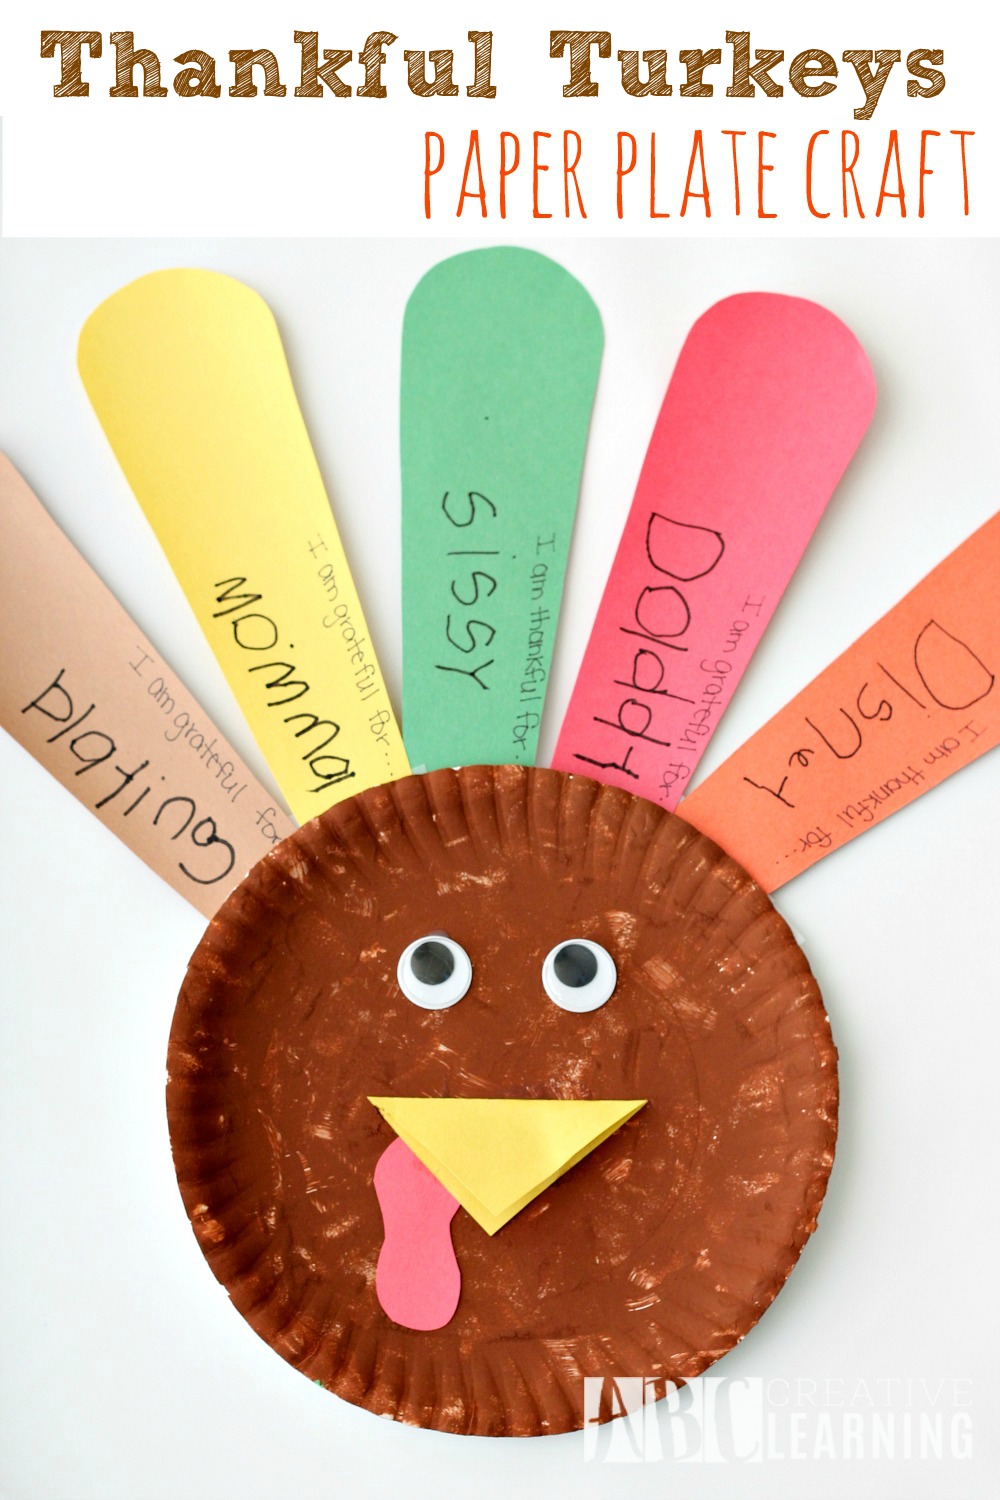 Thankful Turkeys Paper Plate Craft